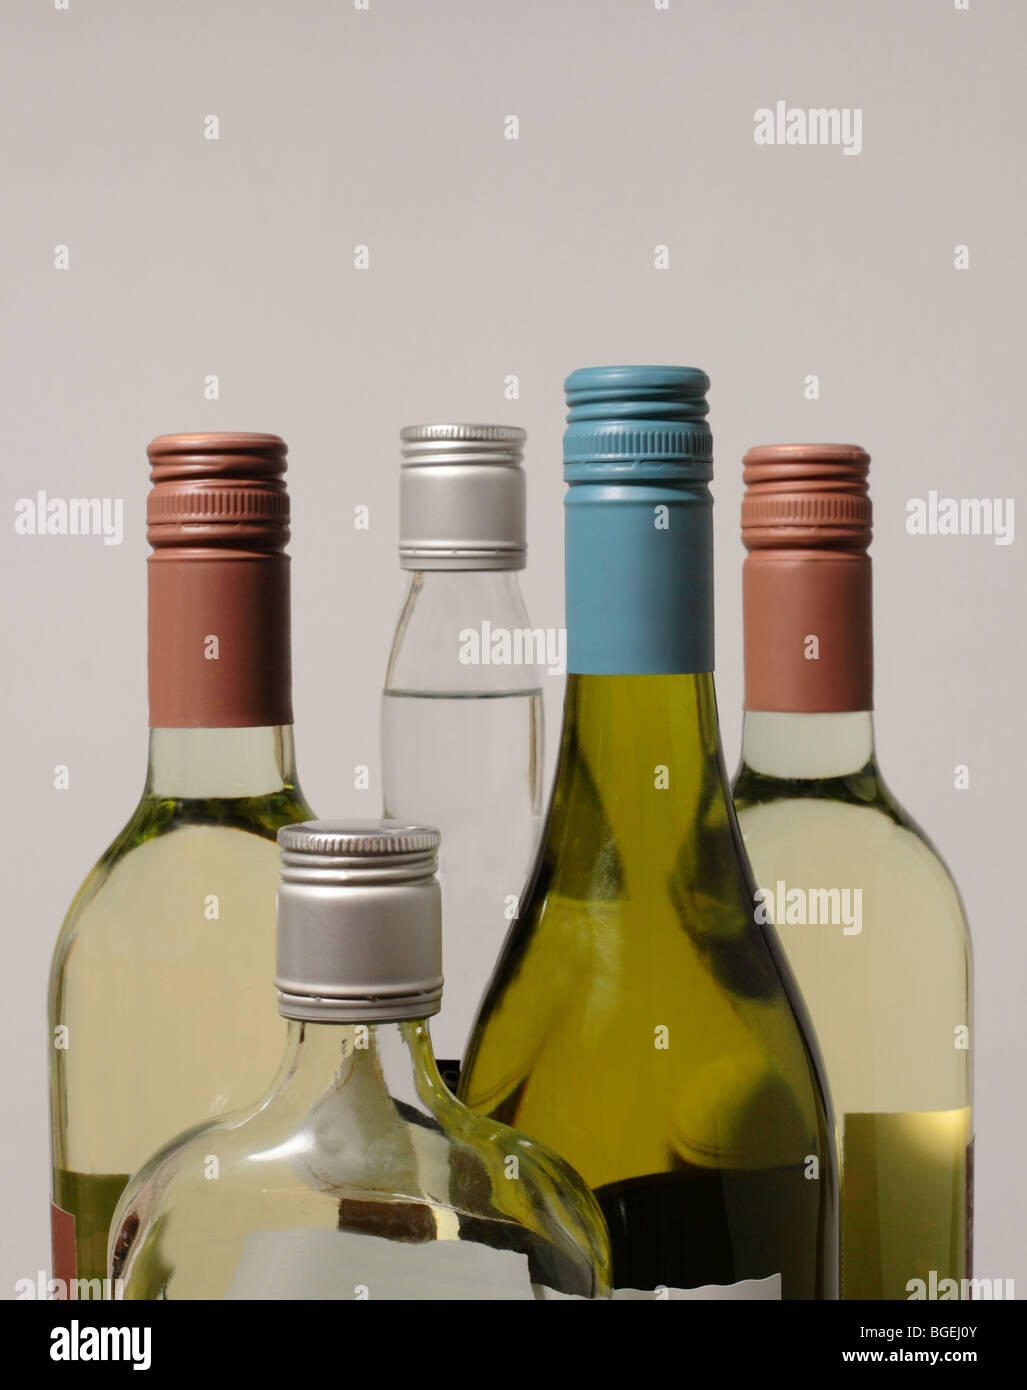 Wine and spirit bottles with screw cap tops Stock Photo